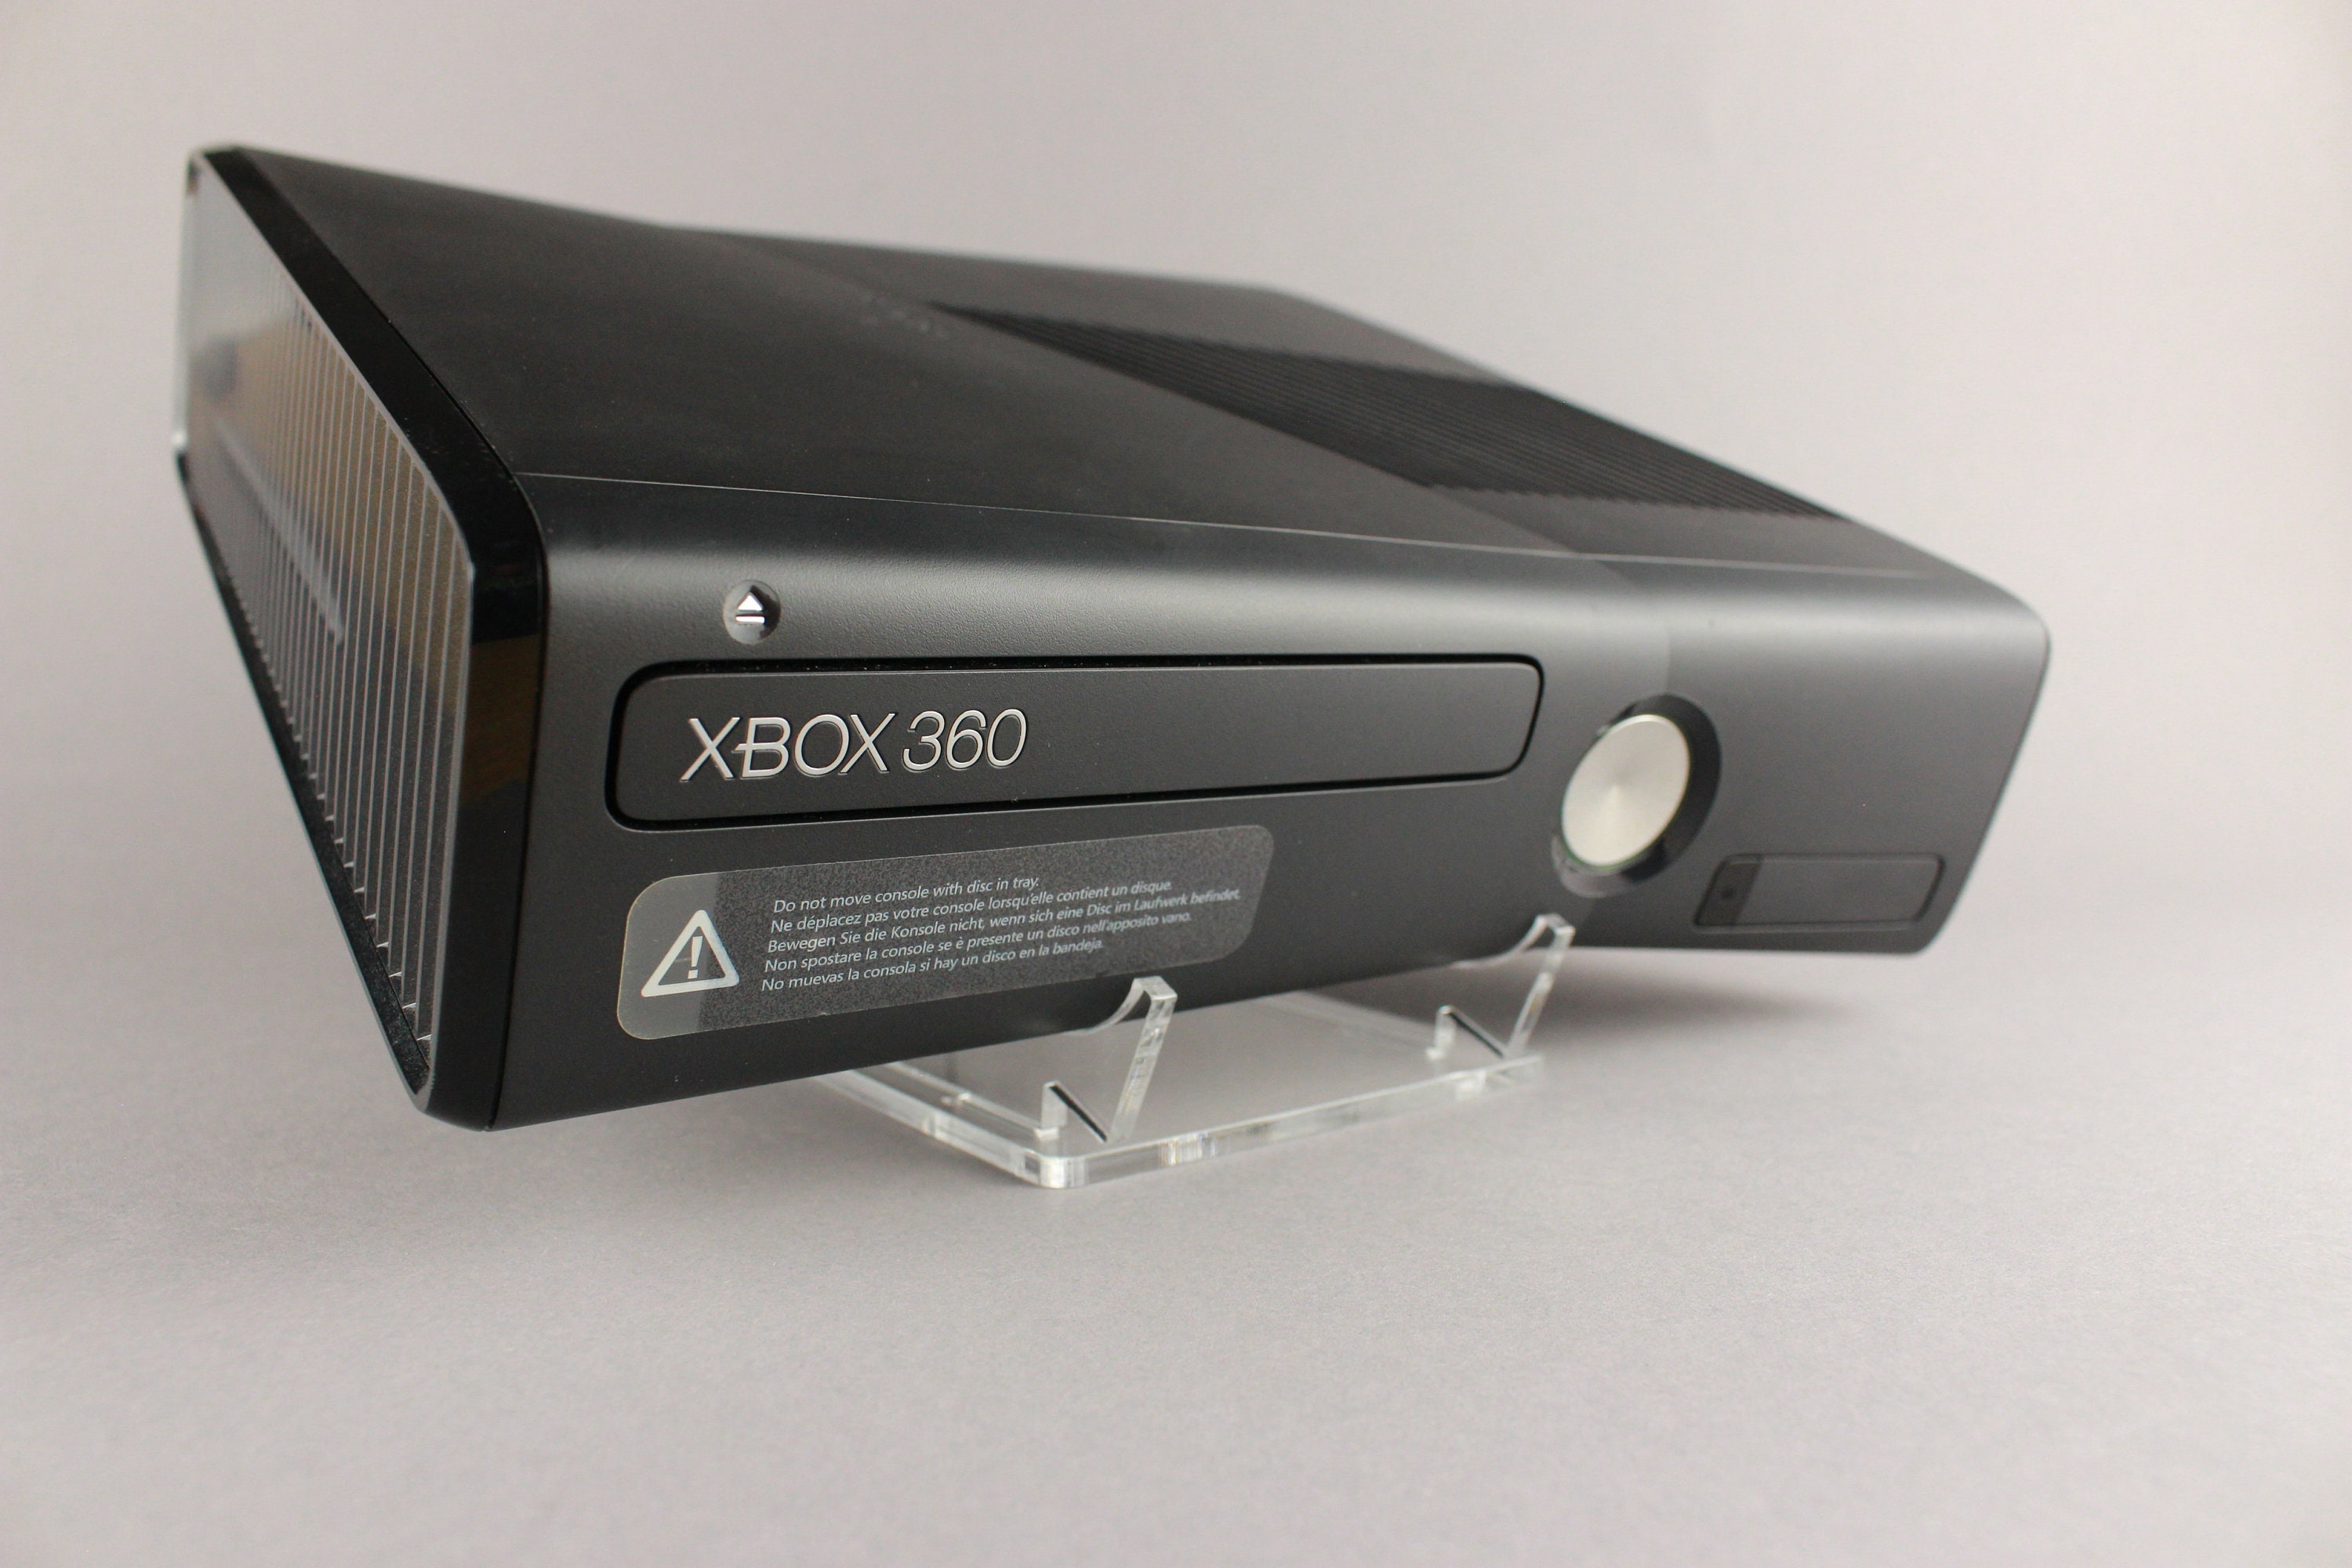 Xbox 360 Original (Arcade) Skin CutFile Vector Template Full Wrap